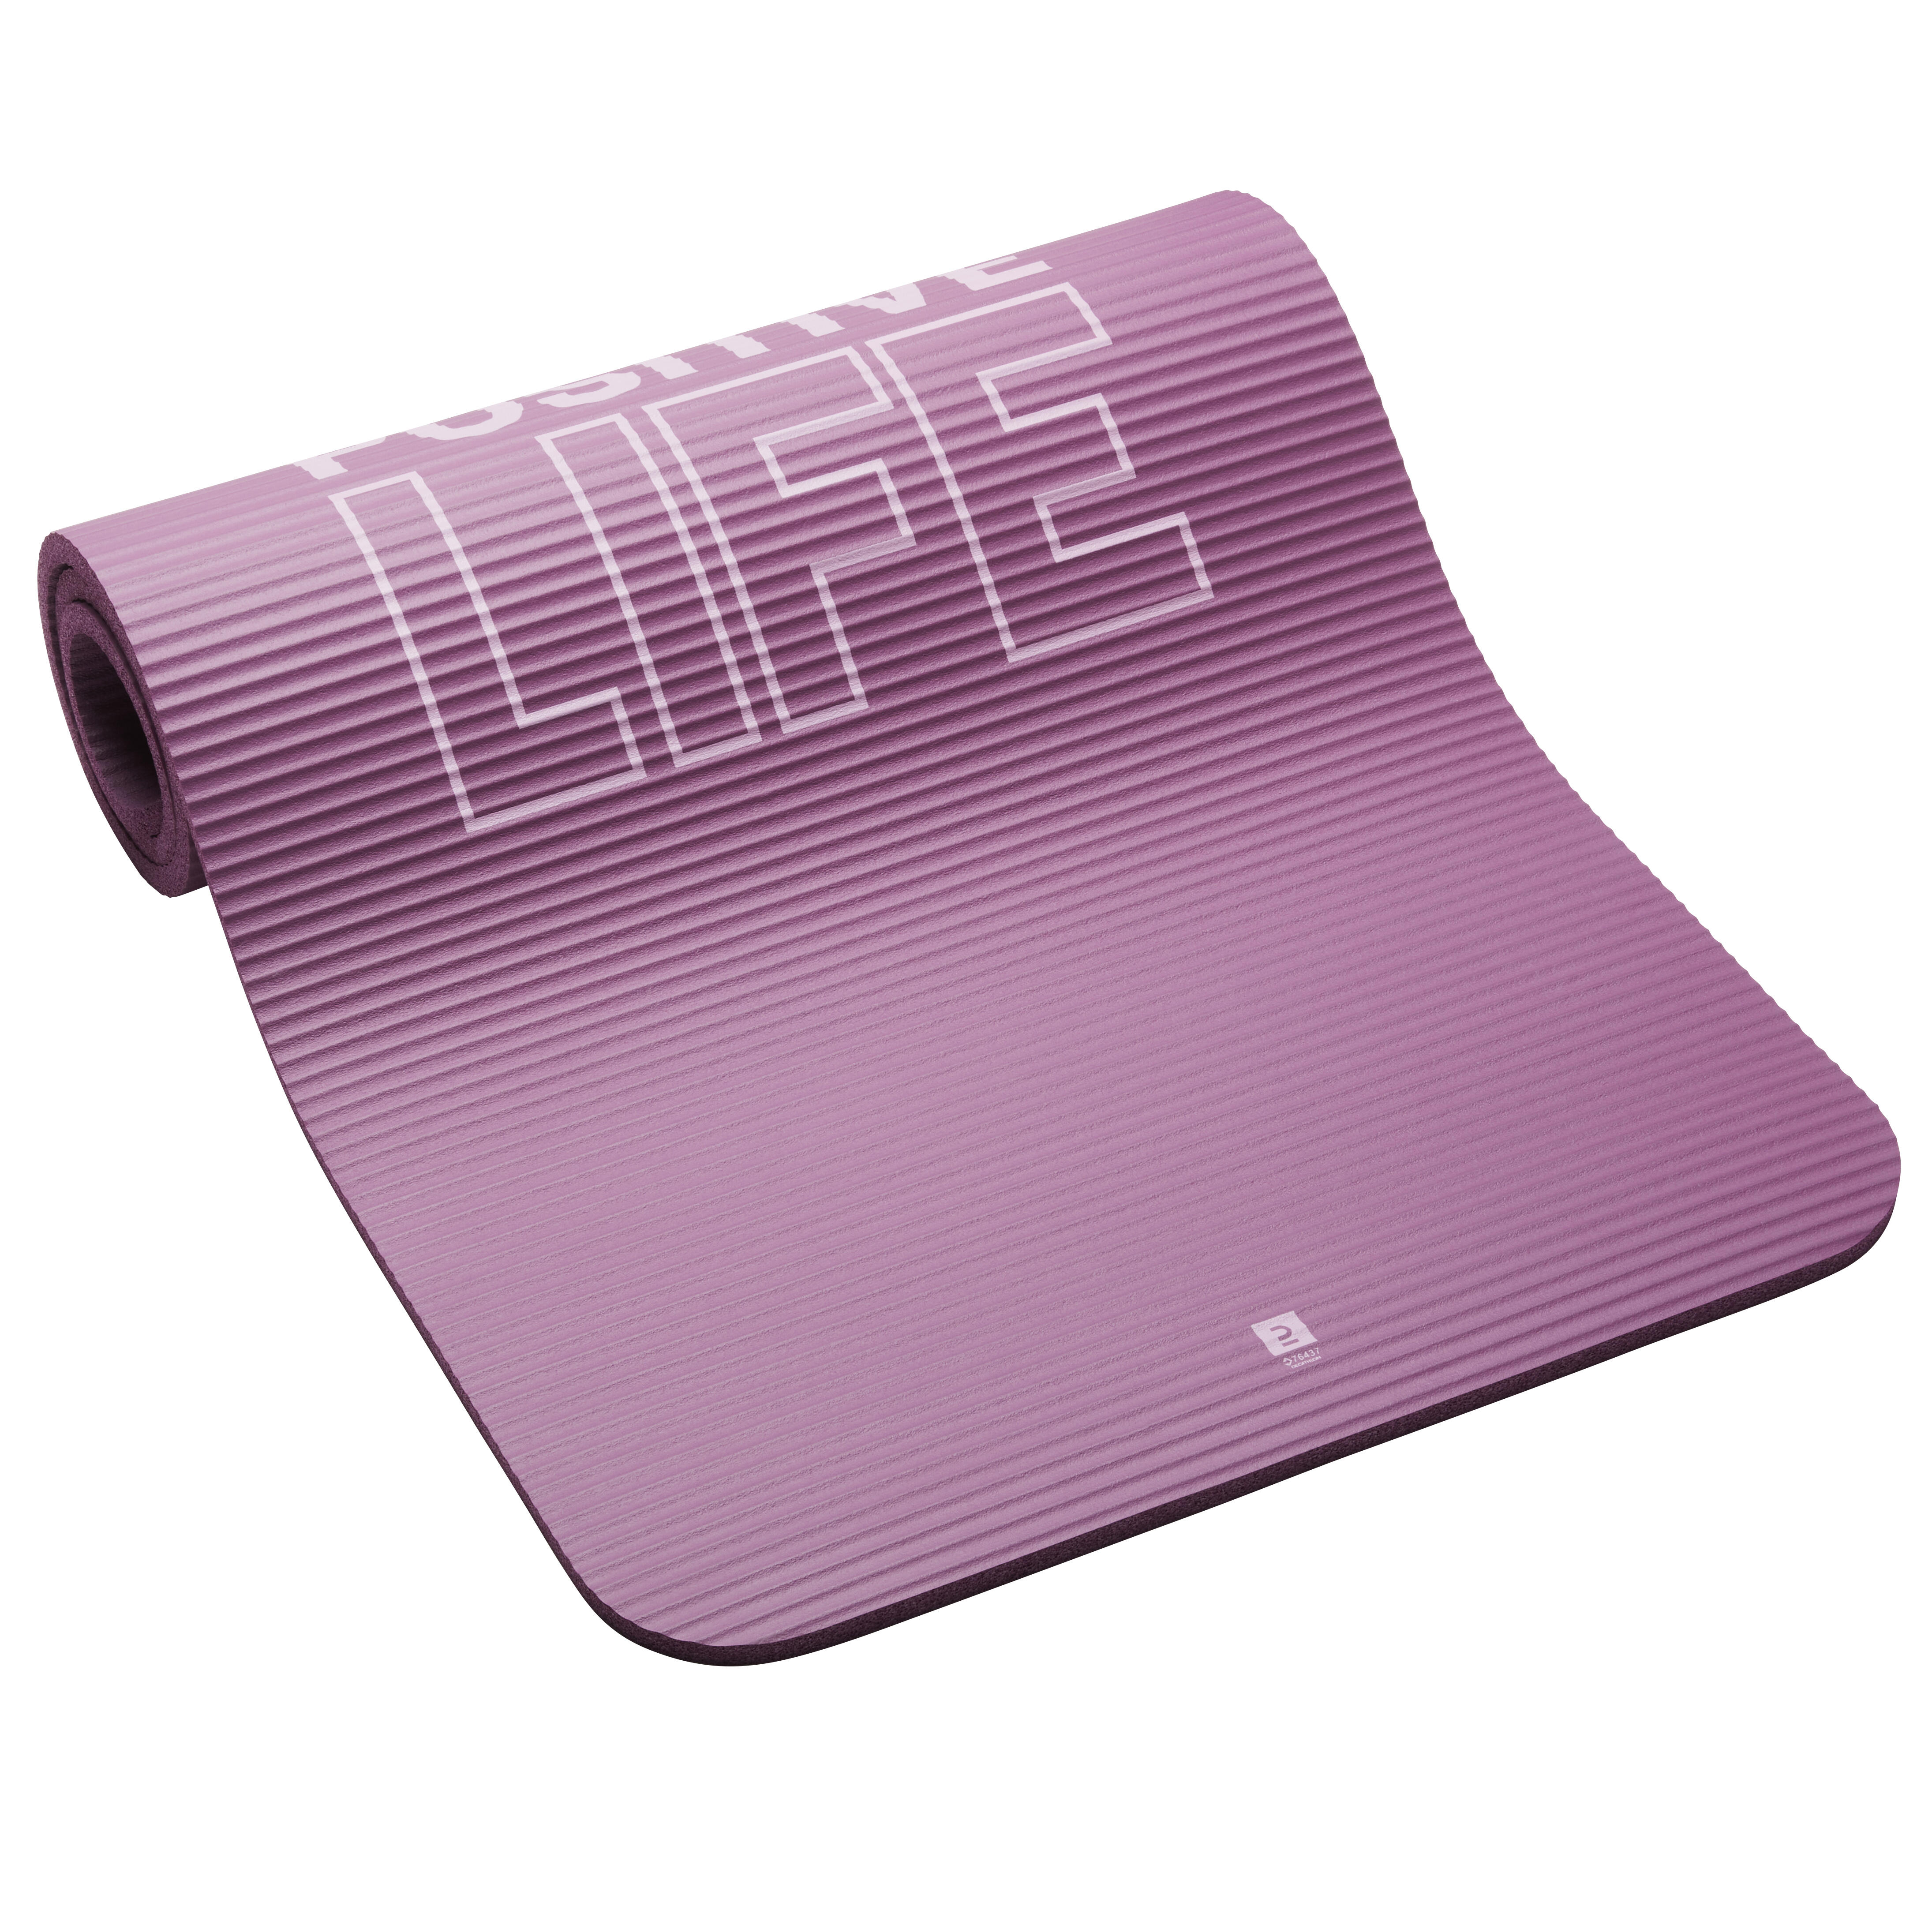 Pilates Exercise Mat Size M - Burgundy - Purple, Light pink - Domyos -  Decathlon